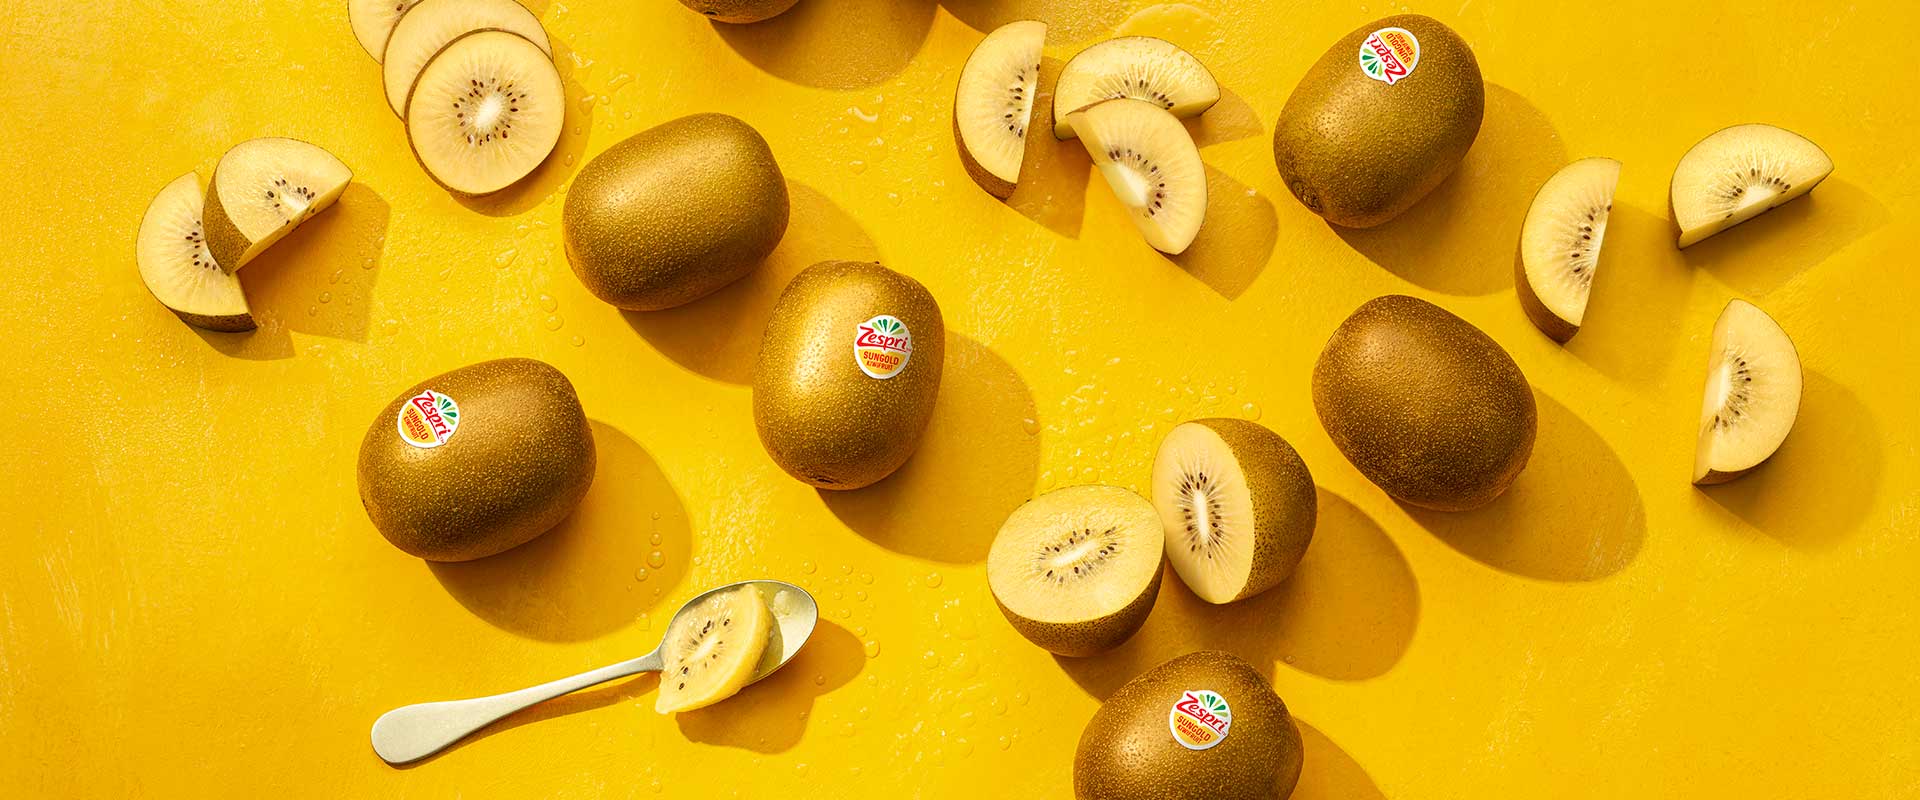 Yellow Kiwifruit: Origin, Properties and Benefits - Header